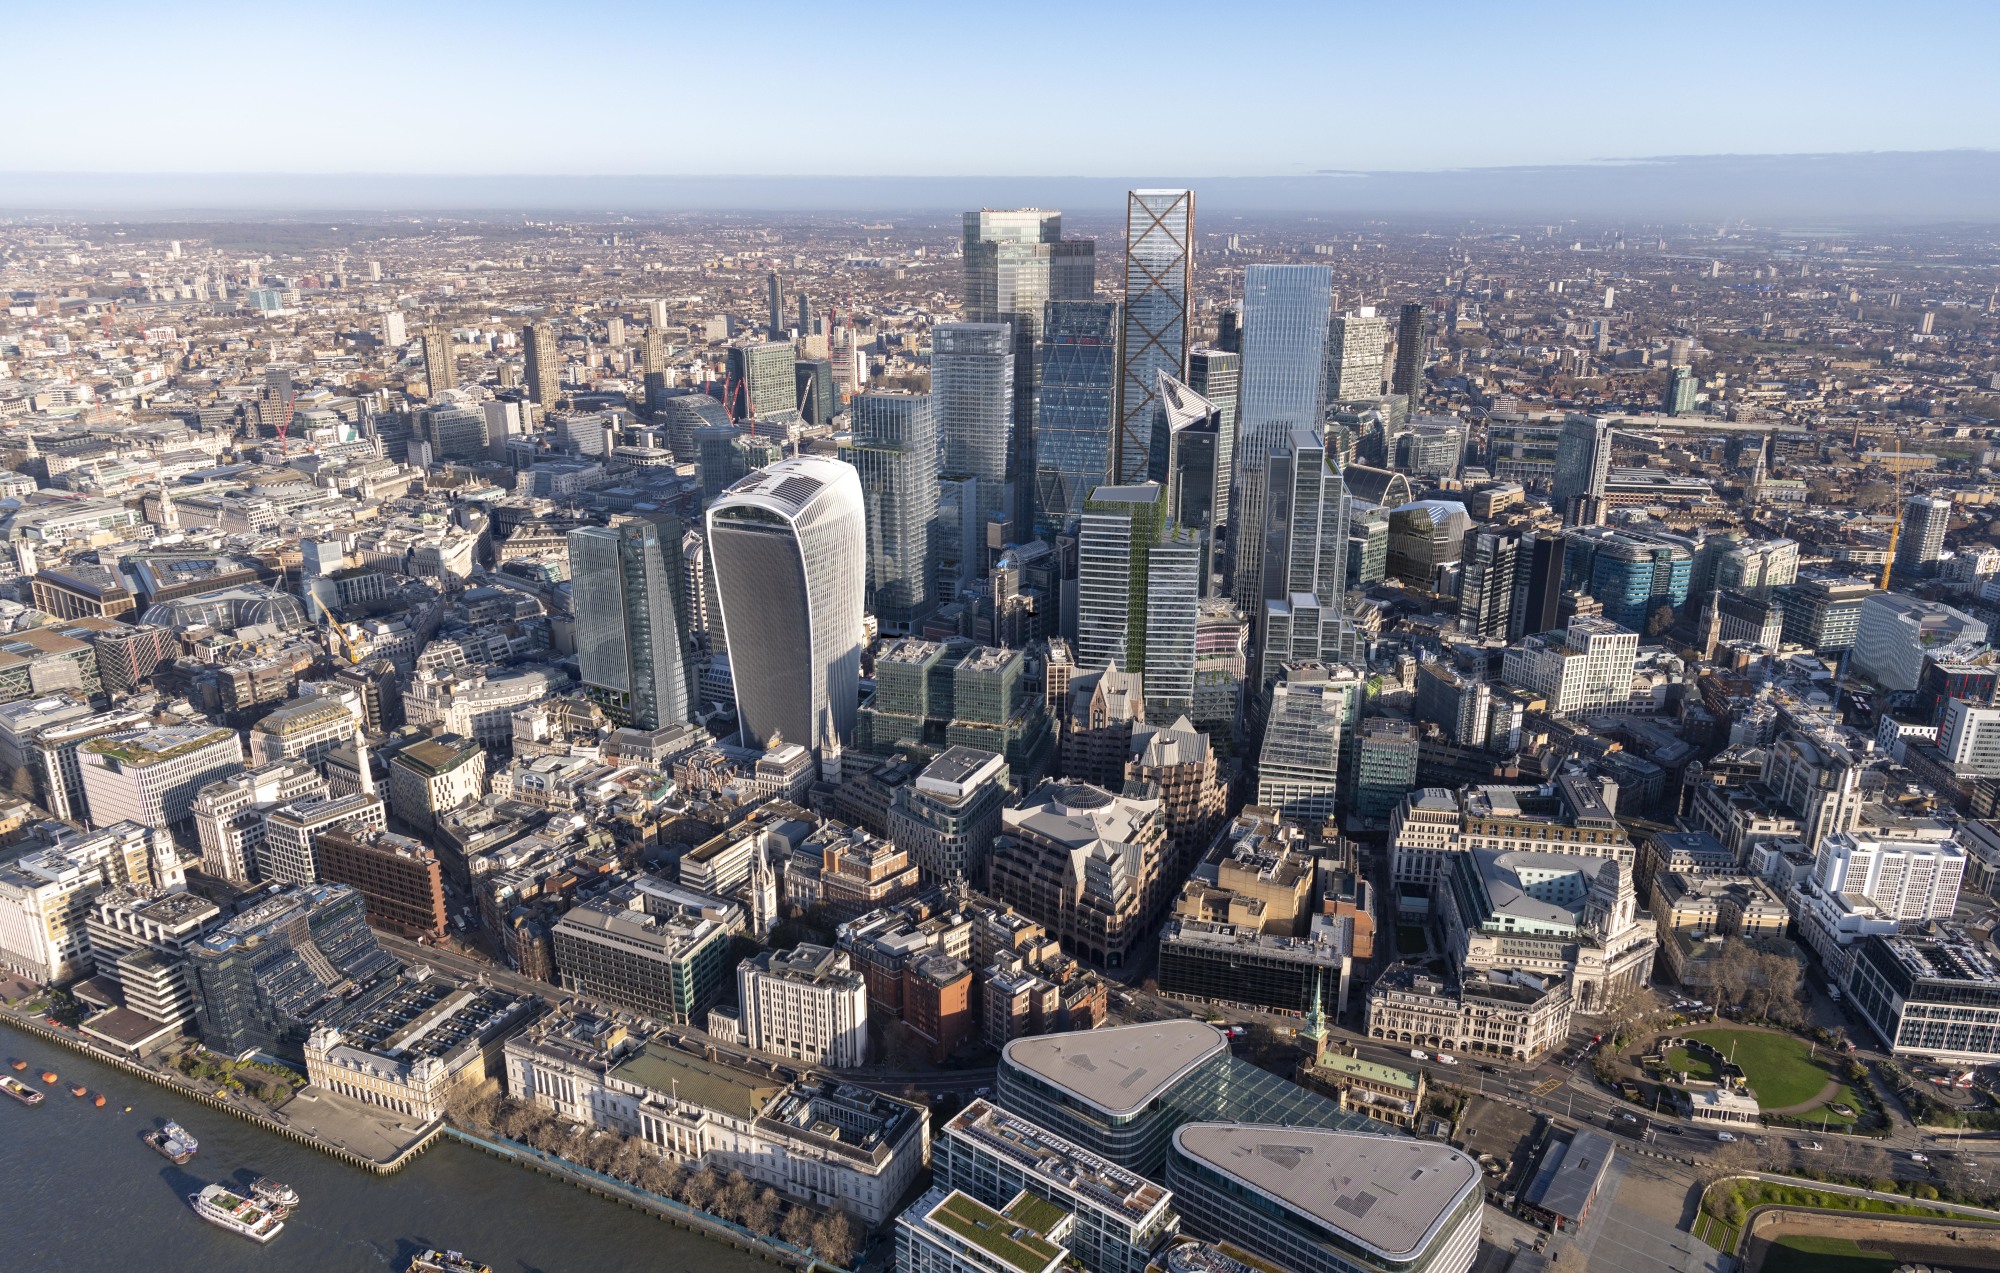 CGI Images Show London’s Future Skyline